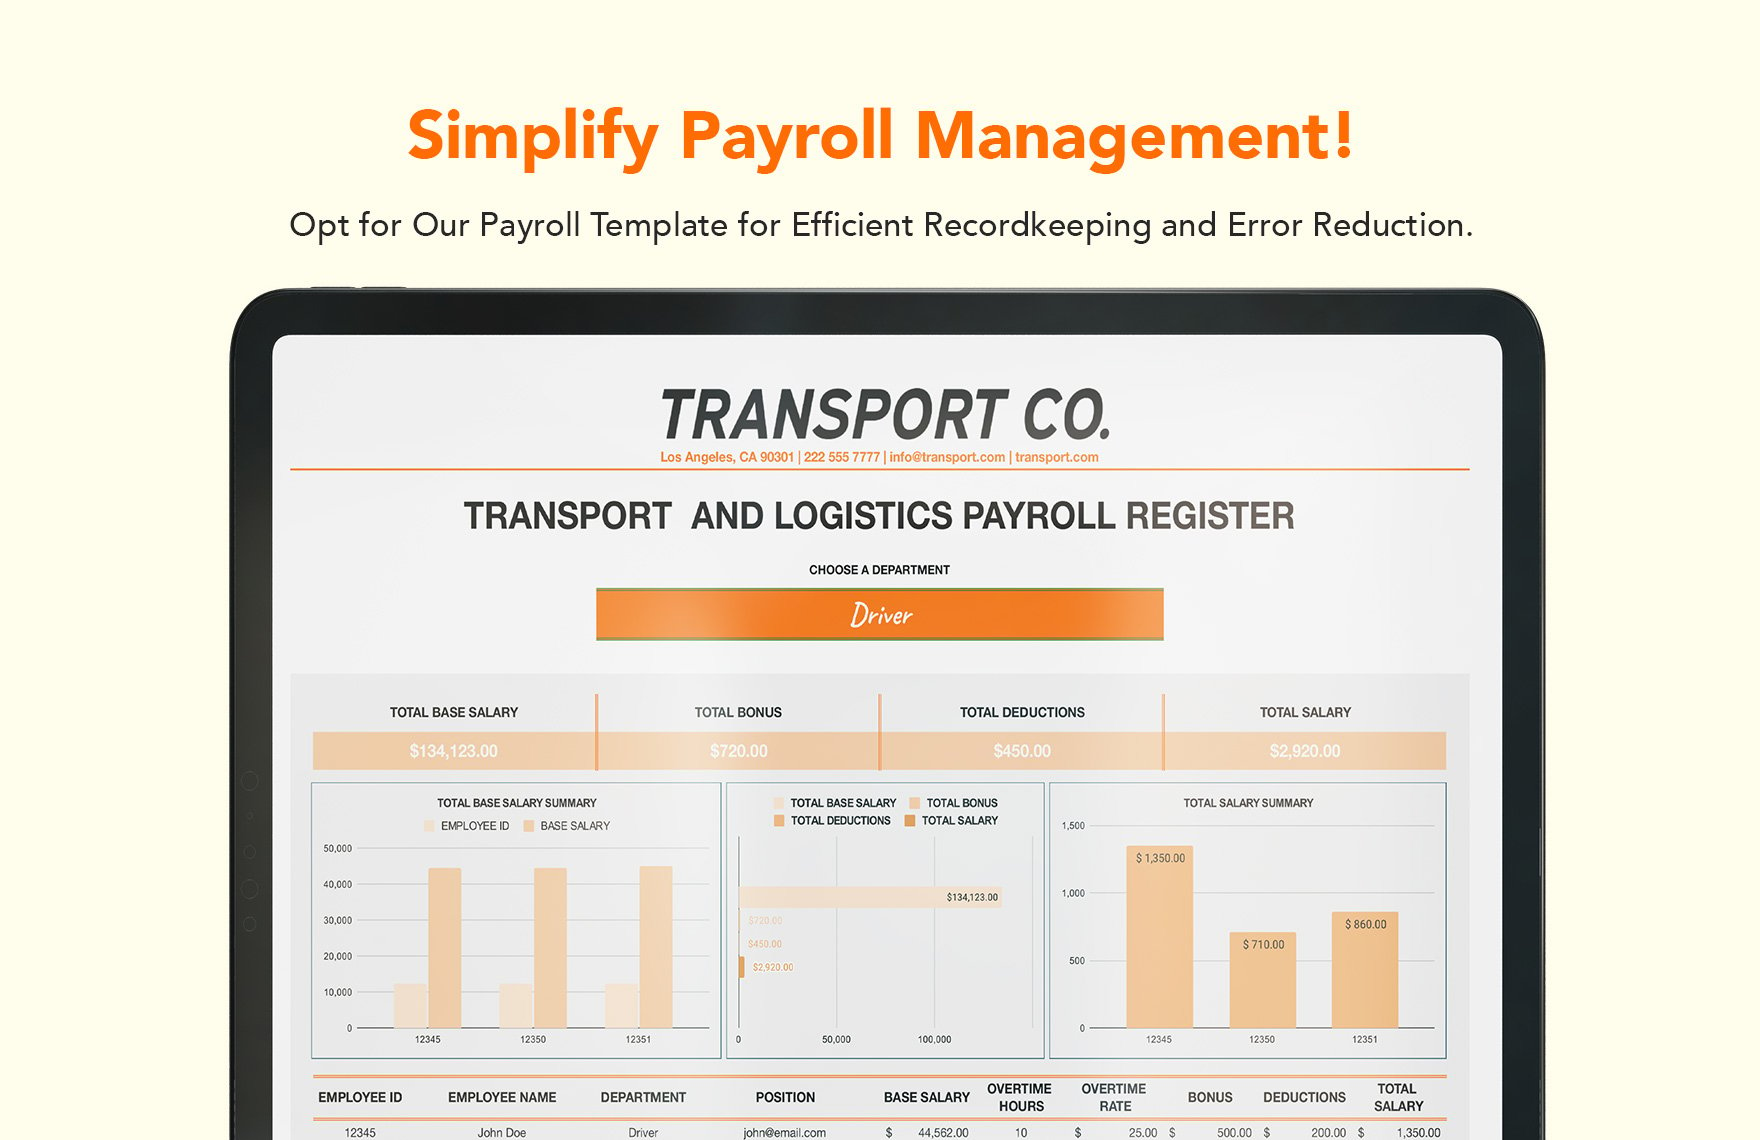 Transport and Logistics Payroll Register Template